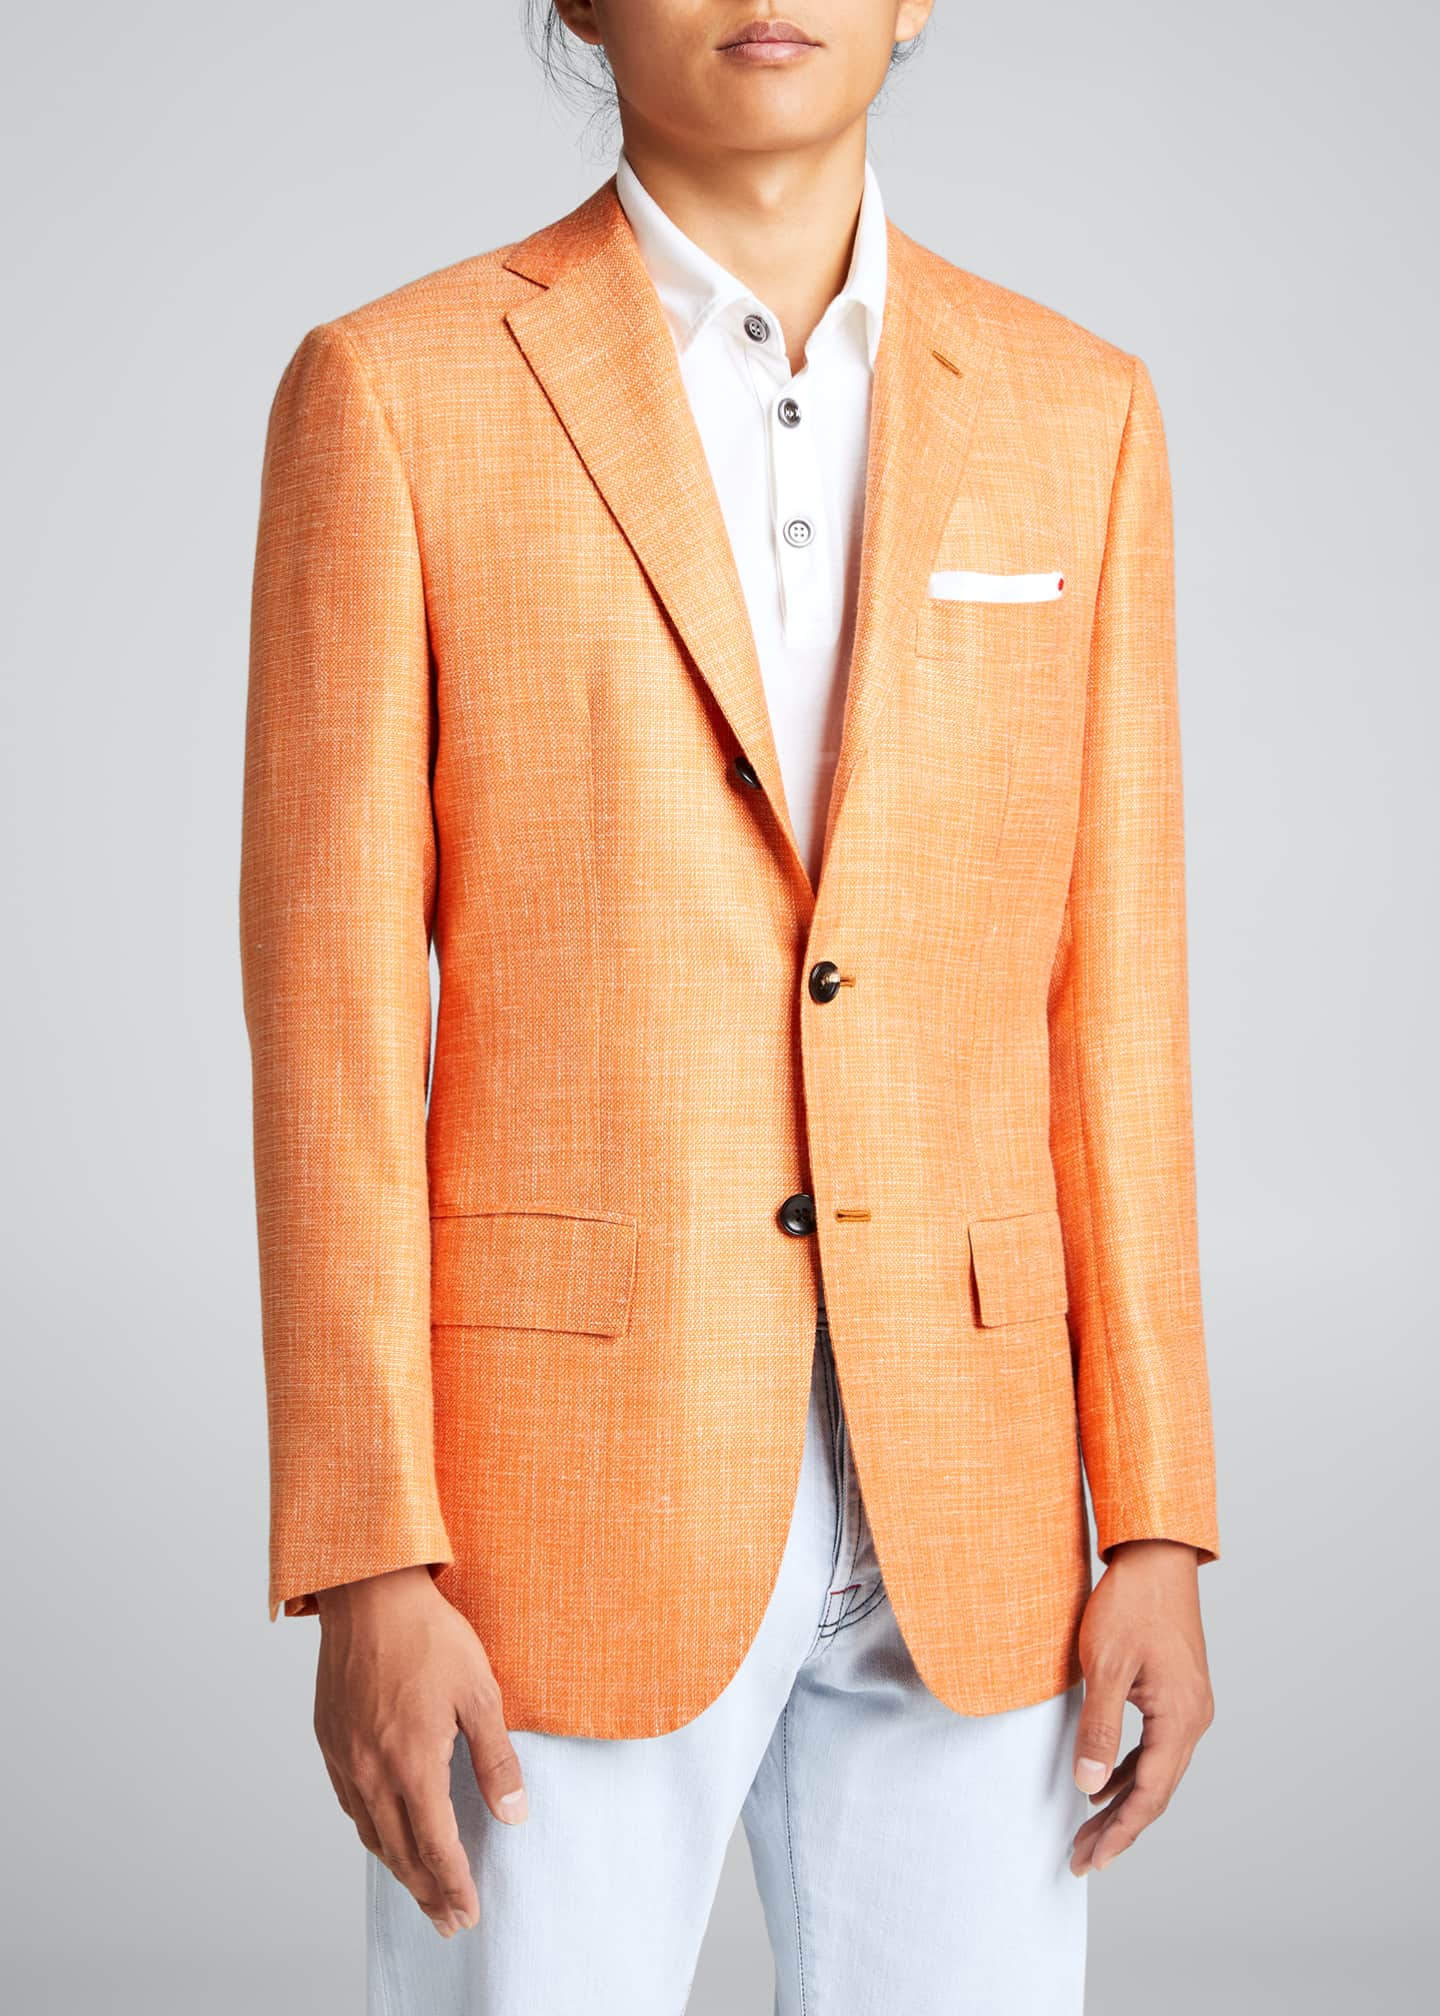 Kiton Men's Two-Button Cashmere-Blend Blazer, Orange - Bergdorf Goodman